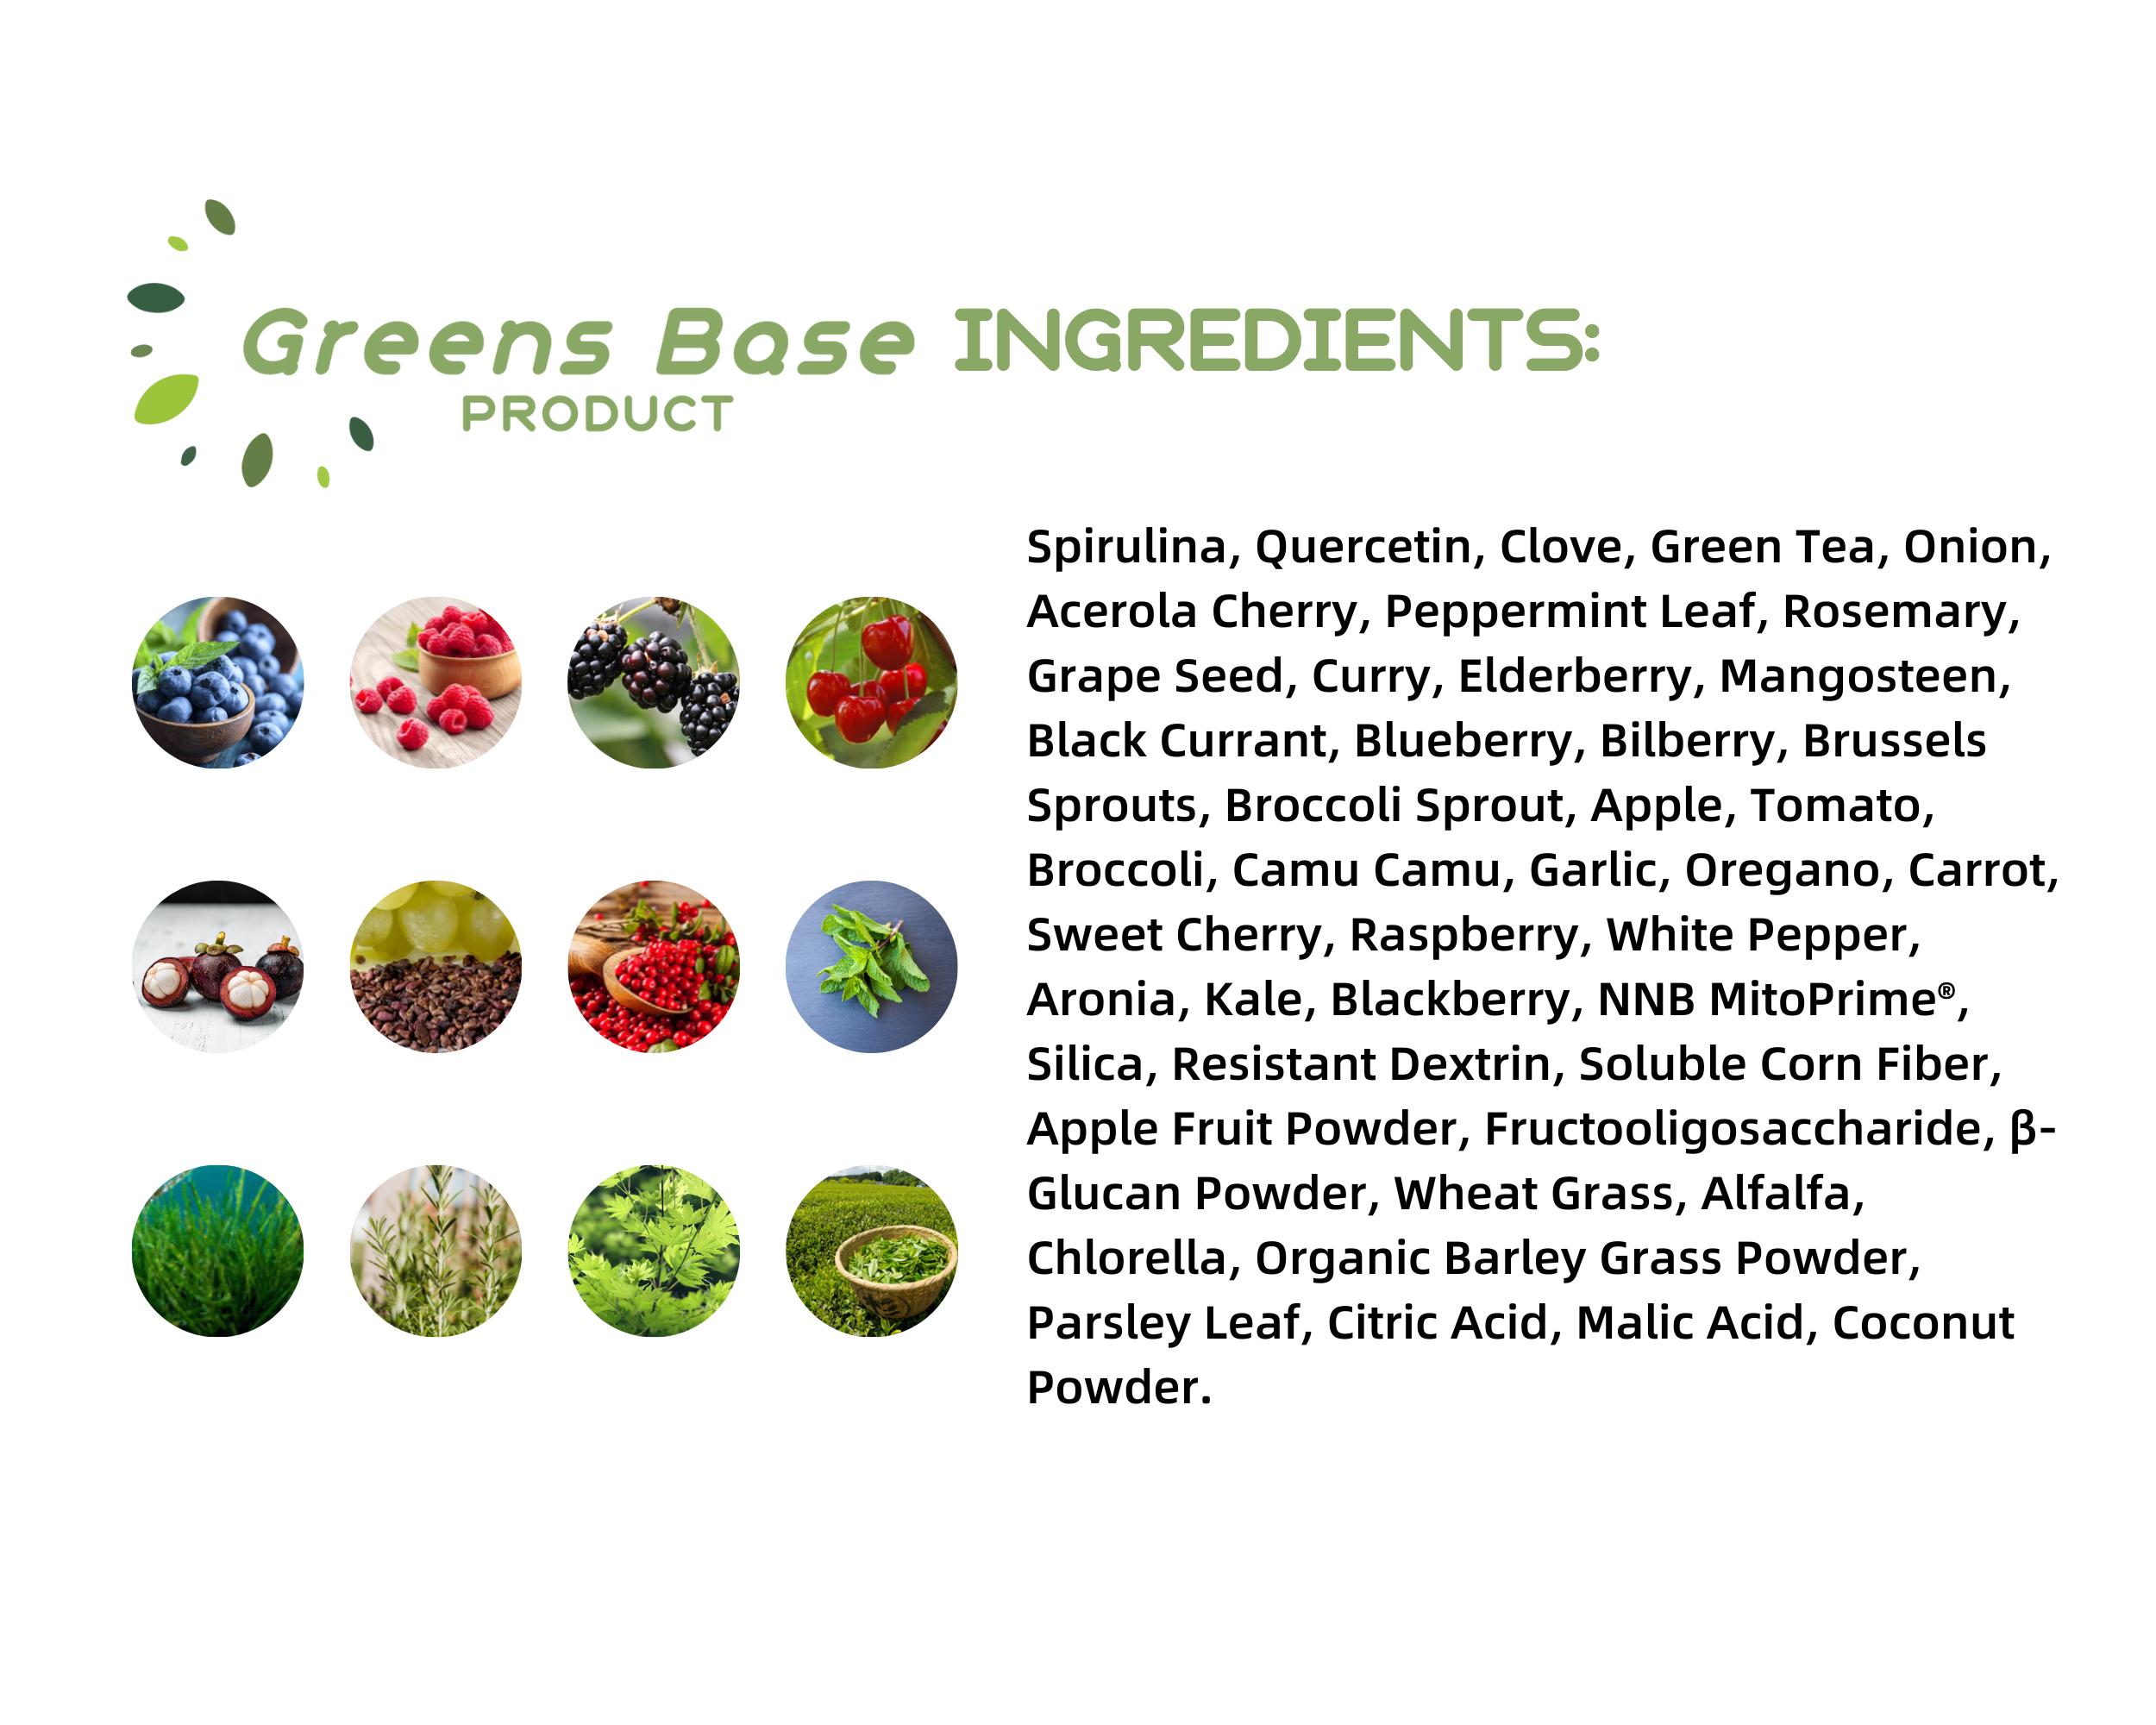 Greens Base Product Benefits